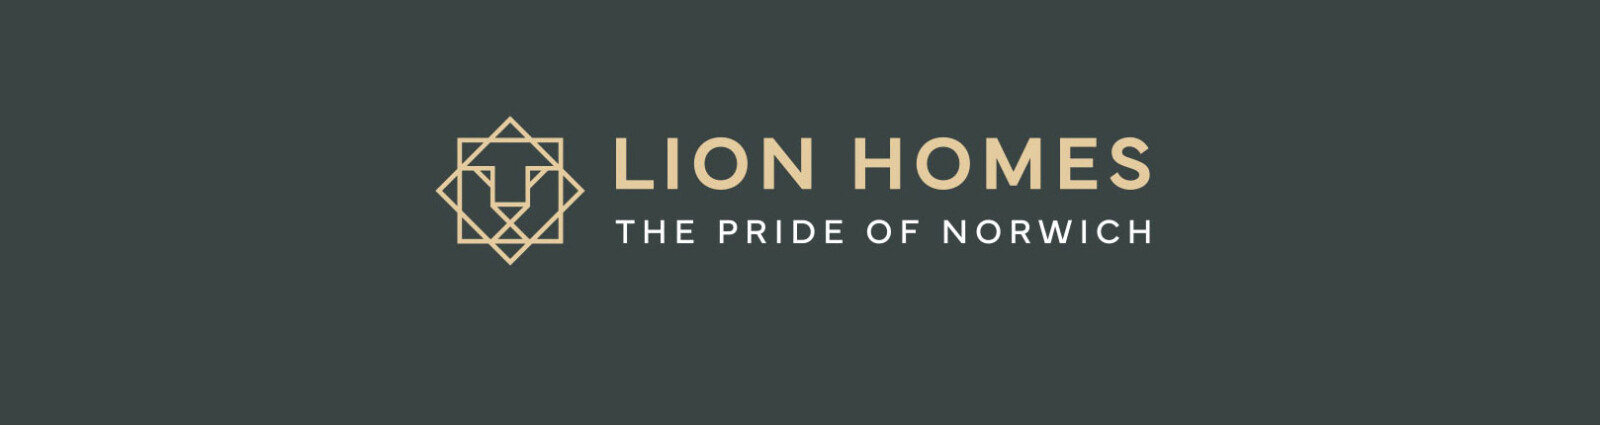 Lions Homes Header v2